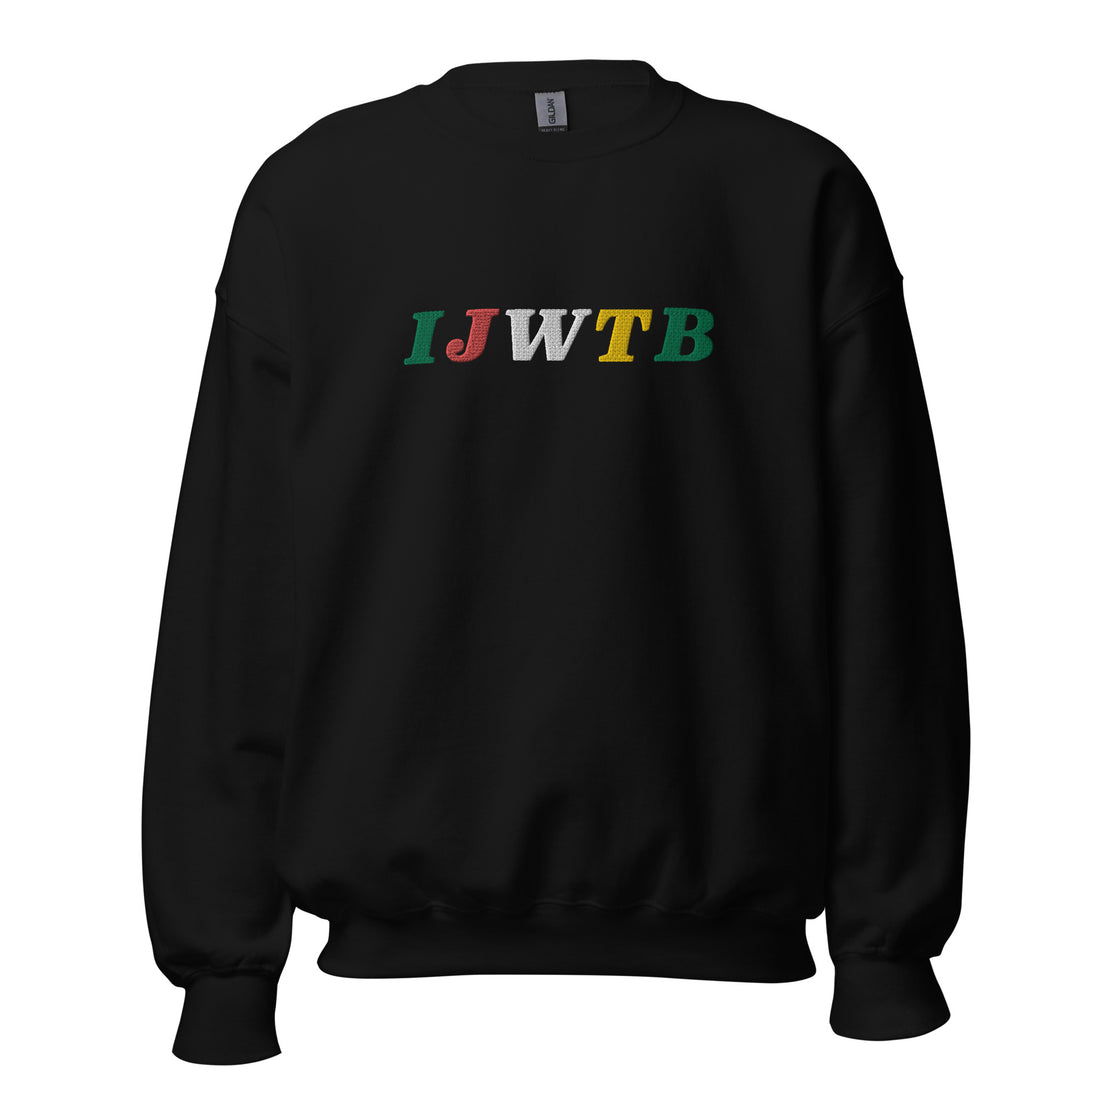 I.J.W.T.B. Embroidered Unisex Sweatshirt